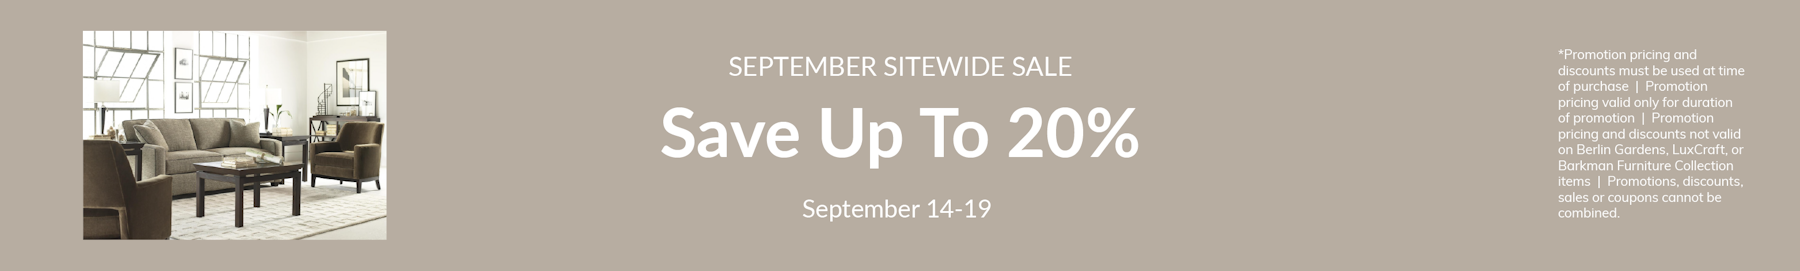 September Sitewide Sale